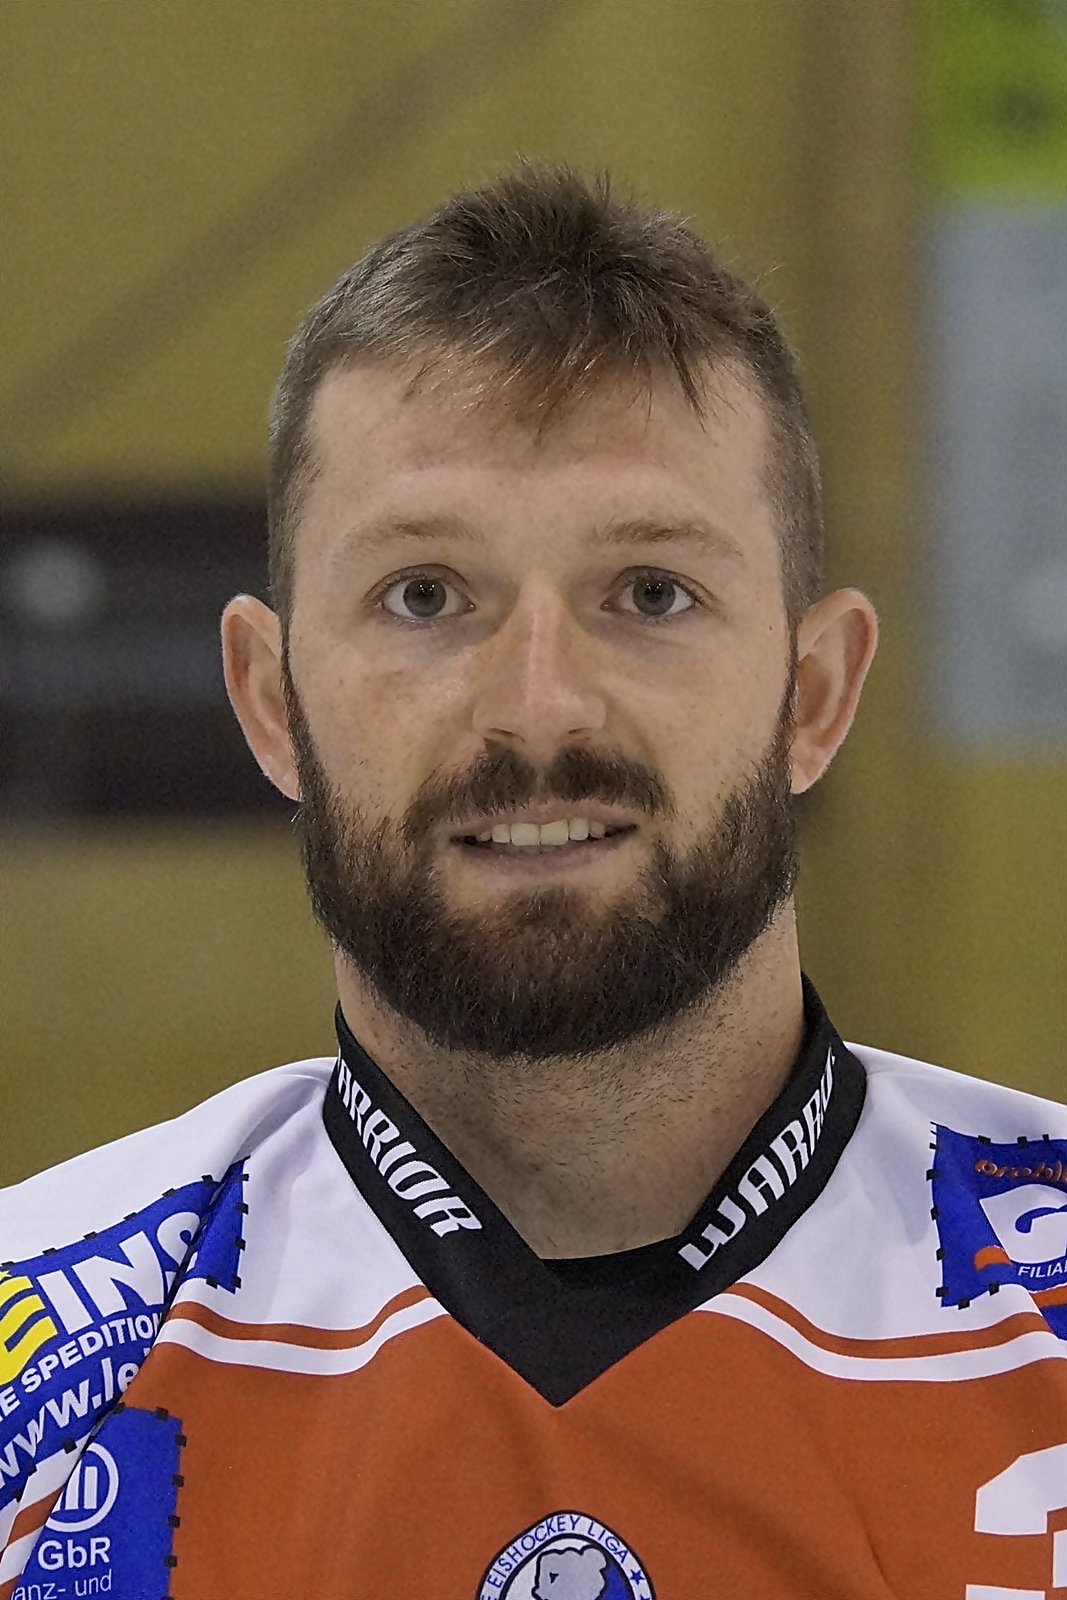 Alexander Krafczyk